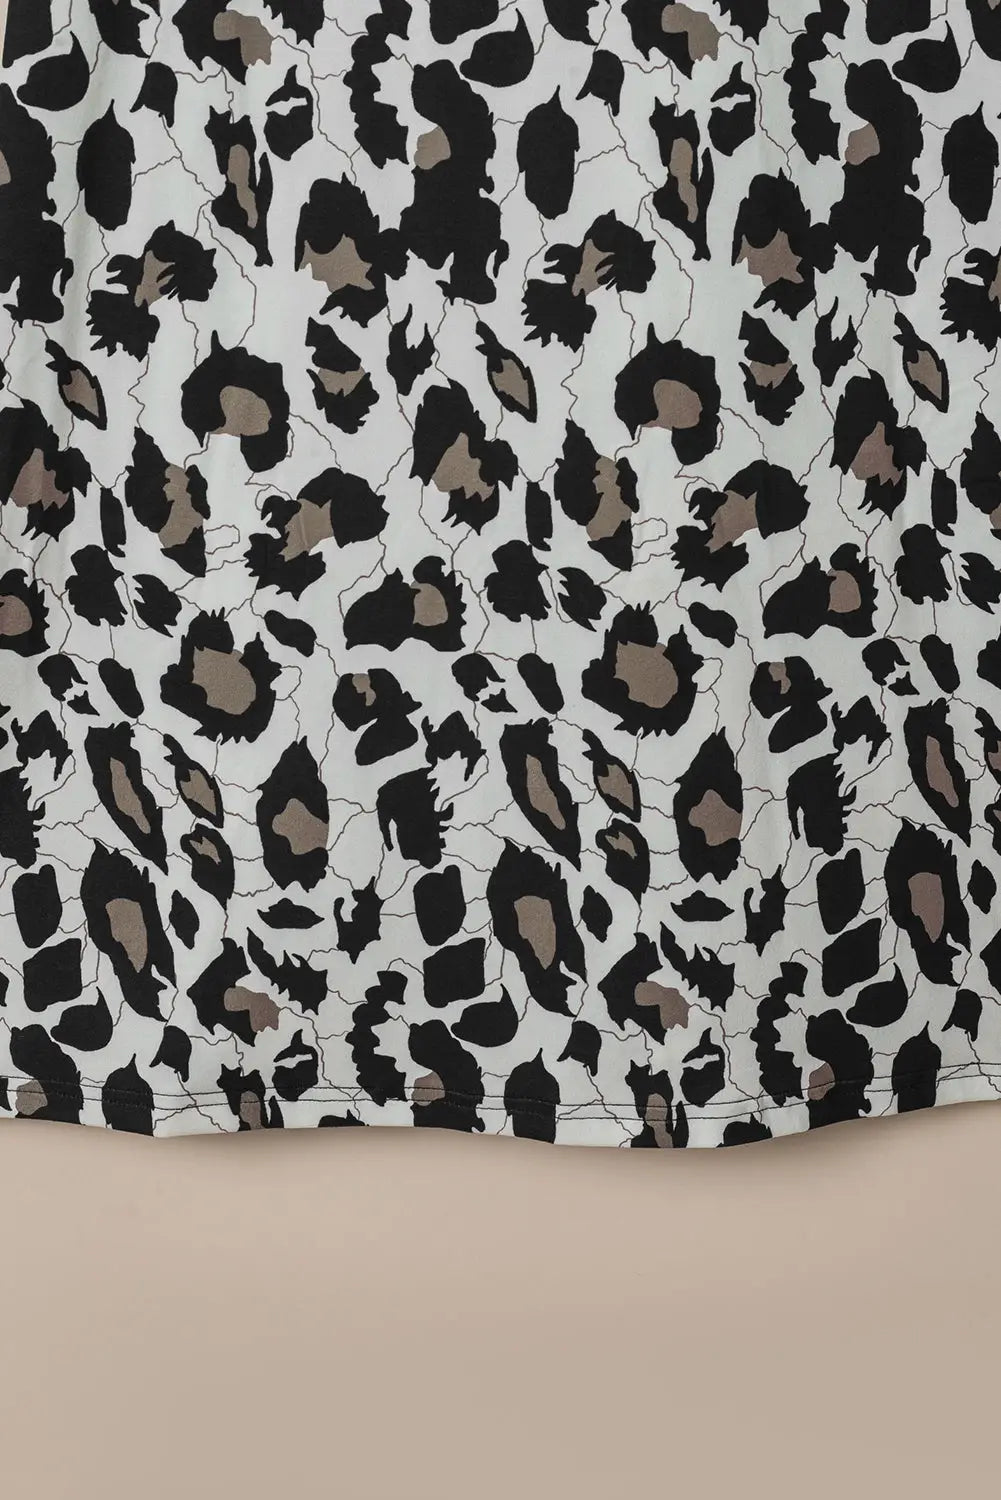 Black leopard color block side slit t shirt maxi dress - dresses